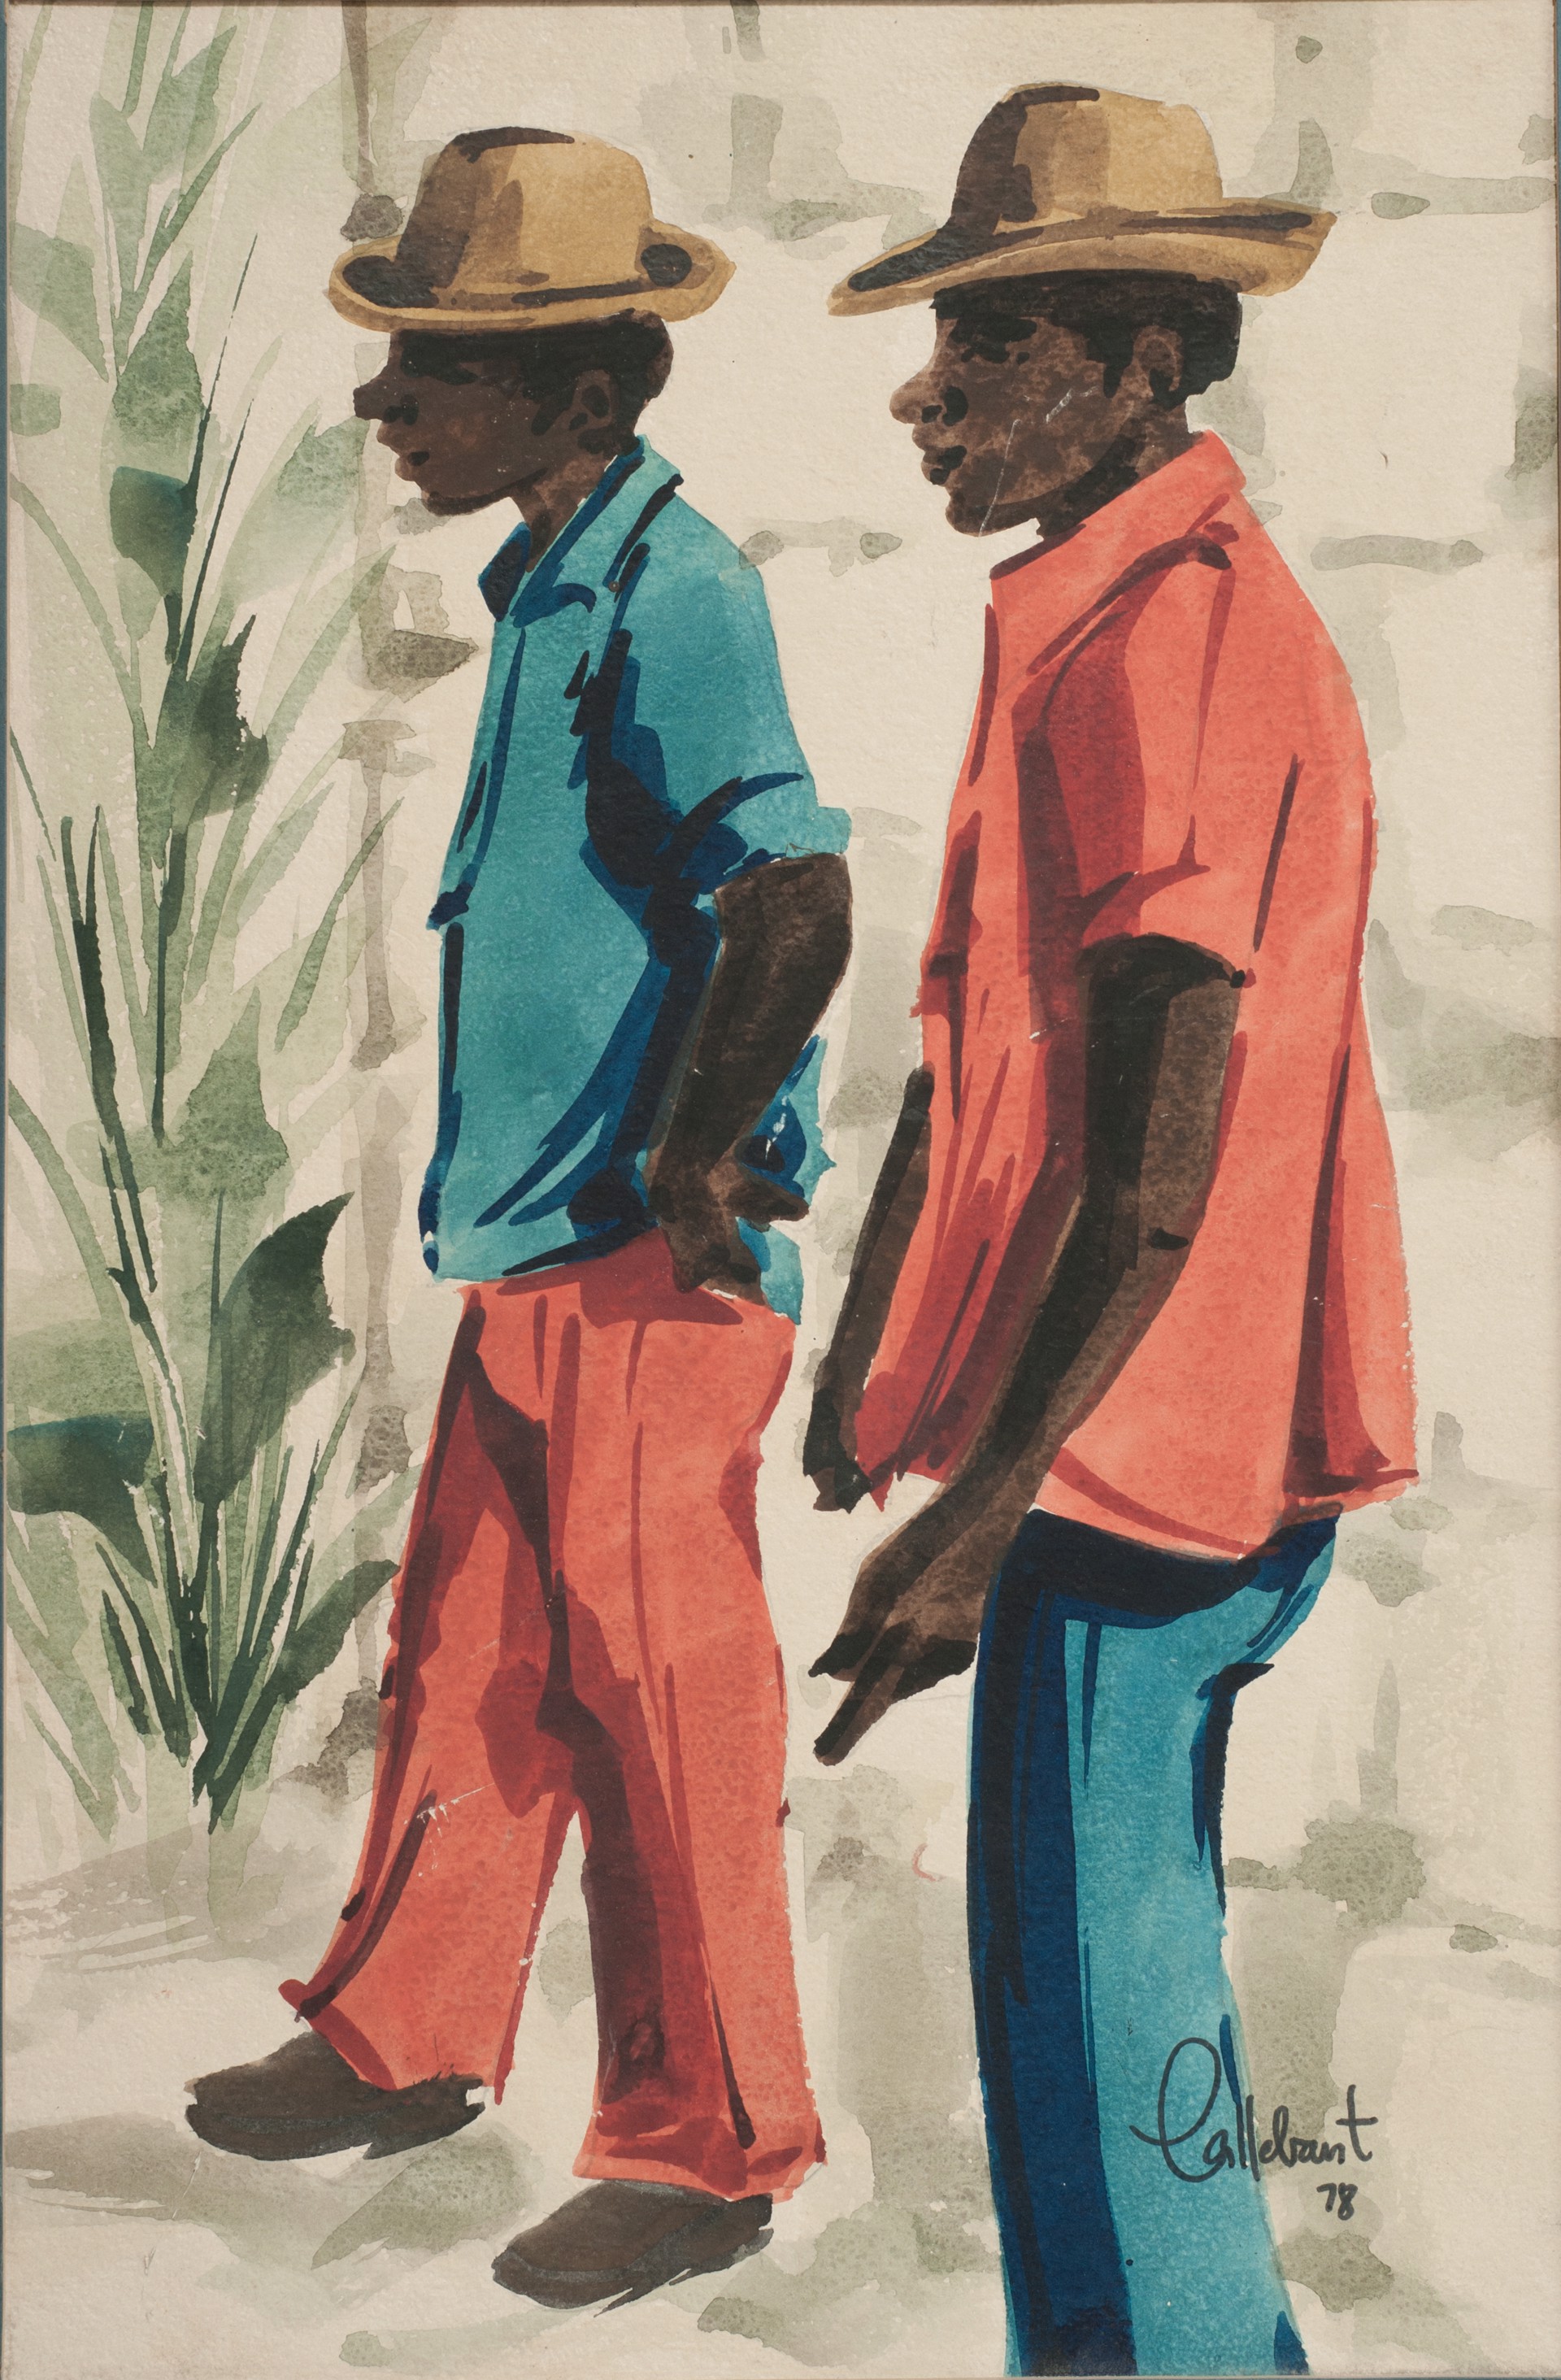 Portrait of Two Men #8-3-96GSN by Raymond Callebaut (Belgian, 1932-1982?)